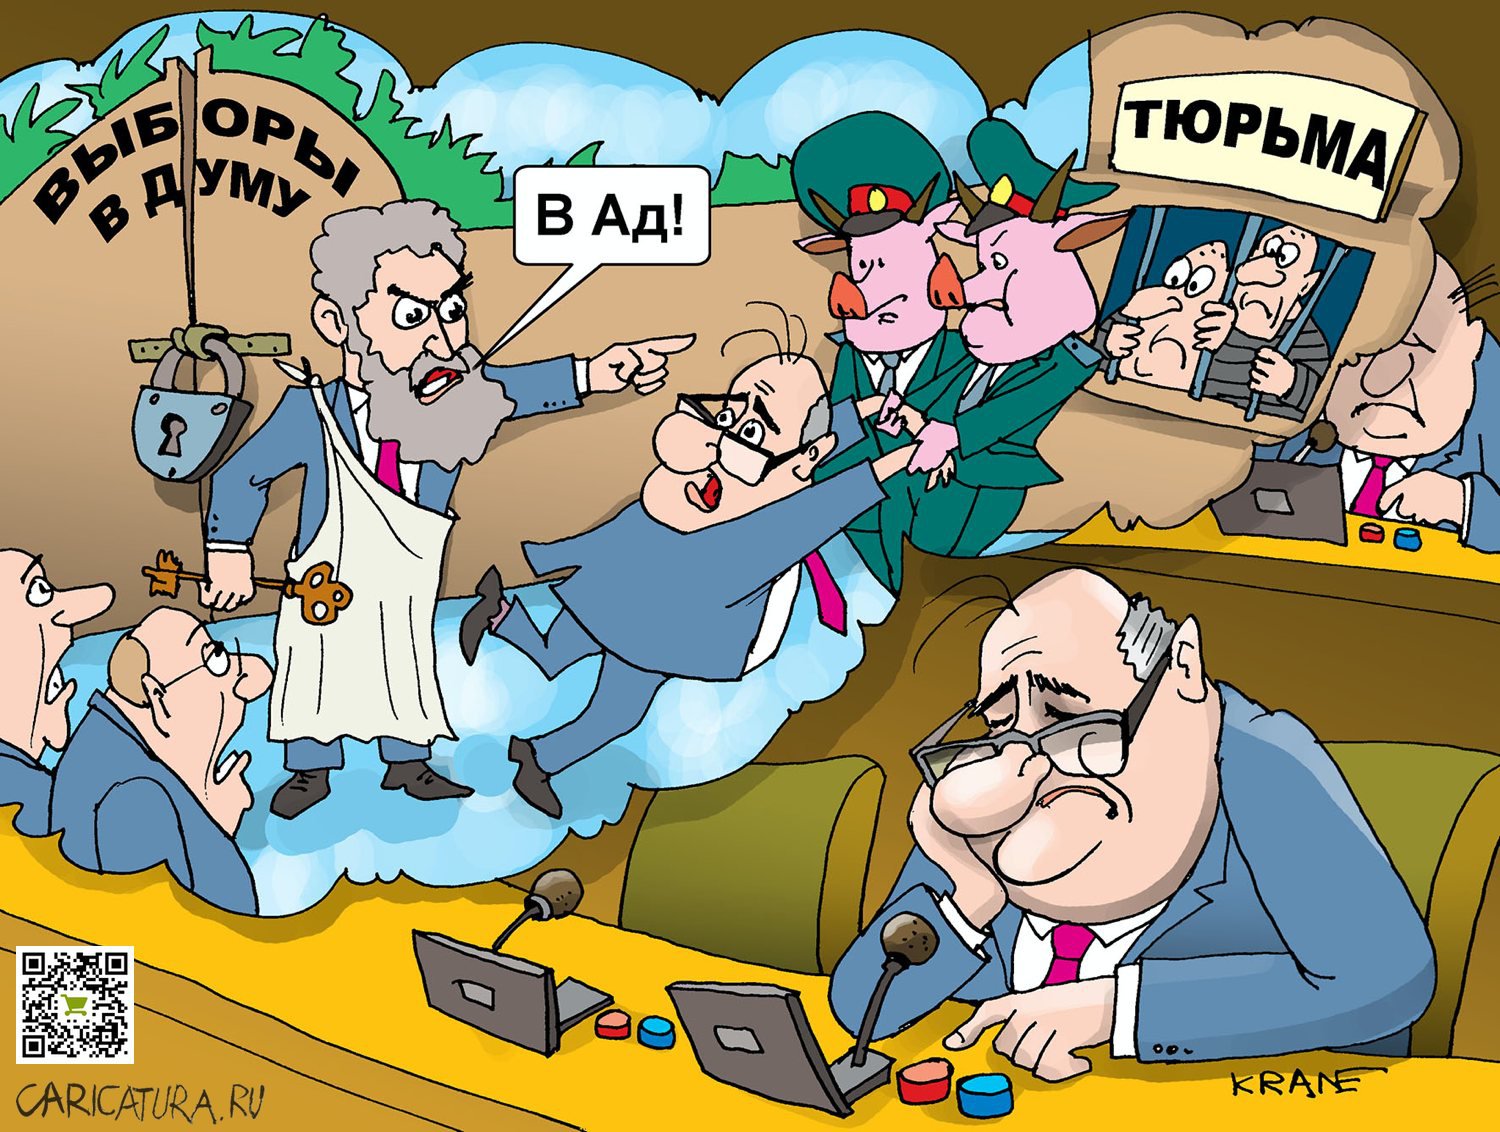 Карикатура "Не лаптем щи хлебаем", Евгений Кран